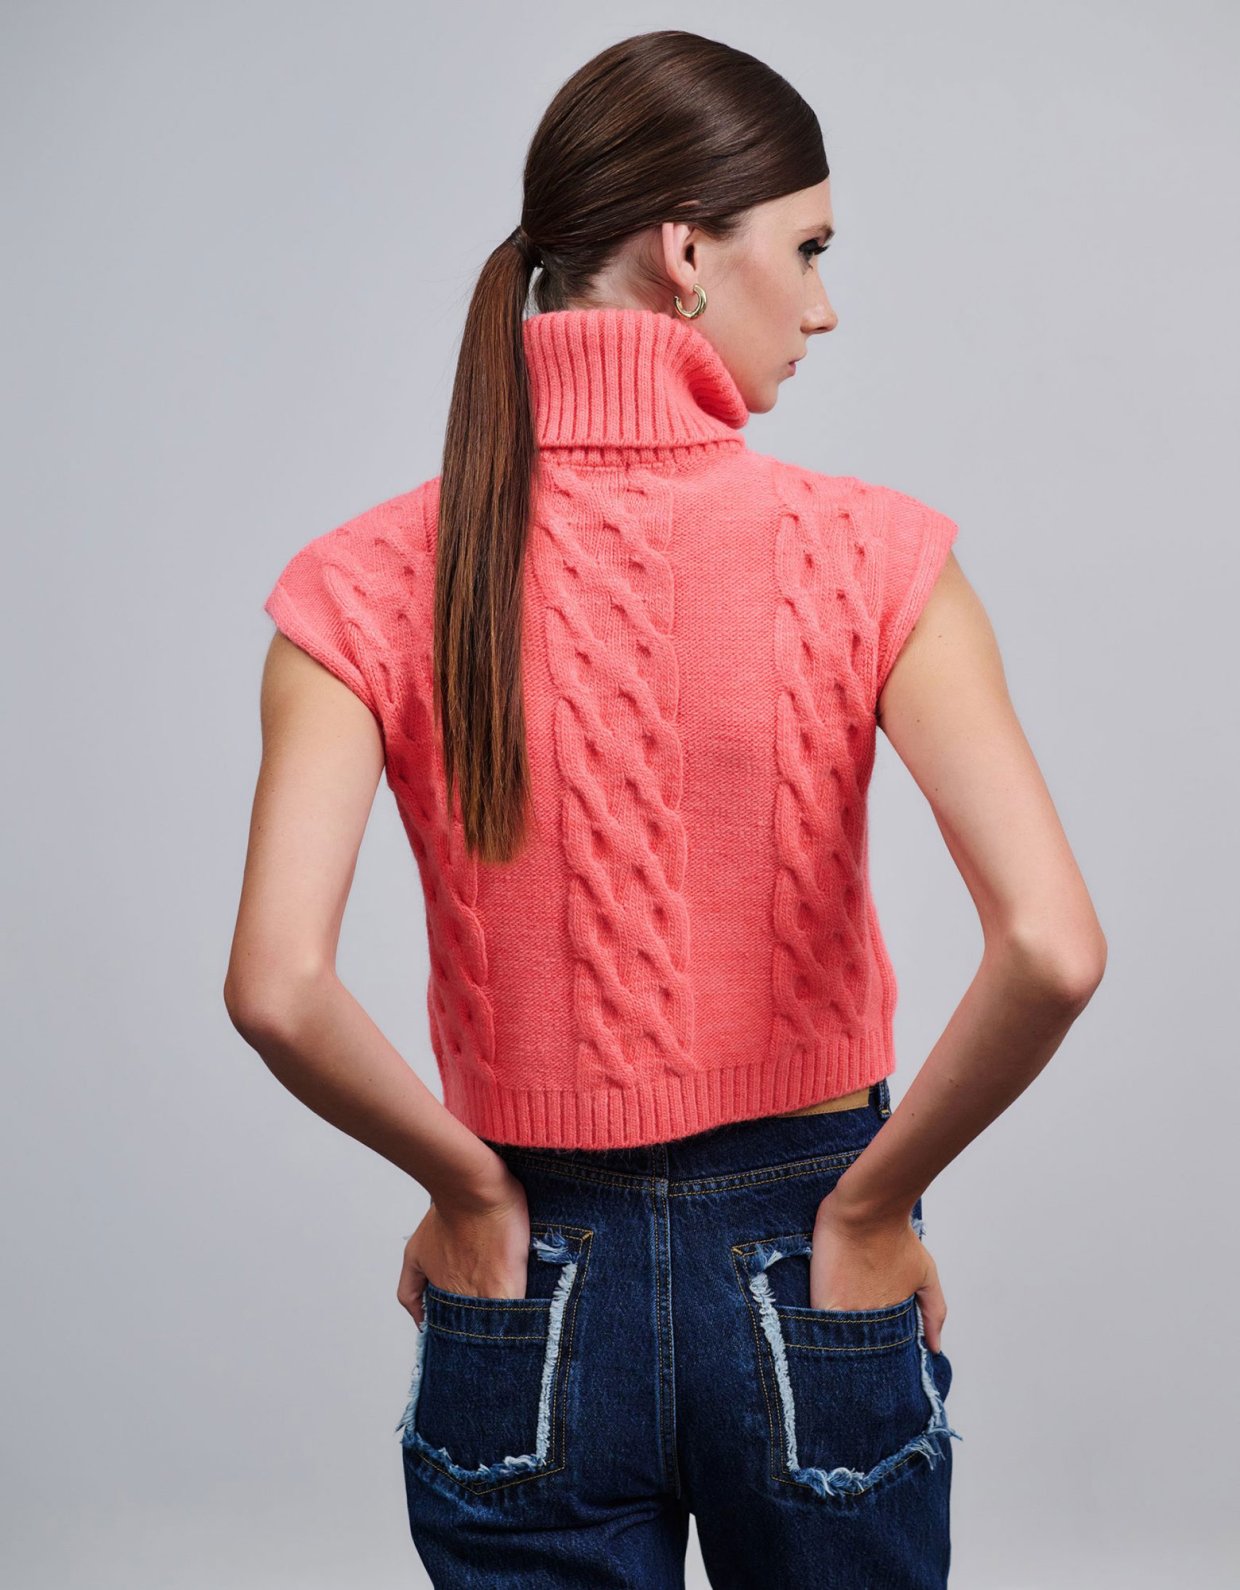 Combos Knitwear Top Turtleneck pink